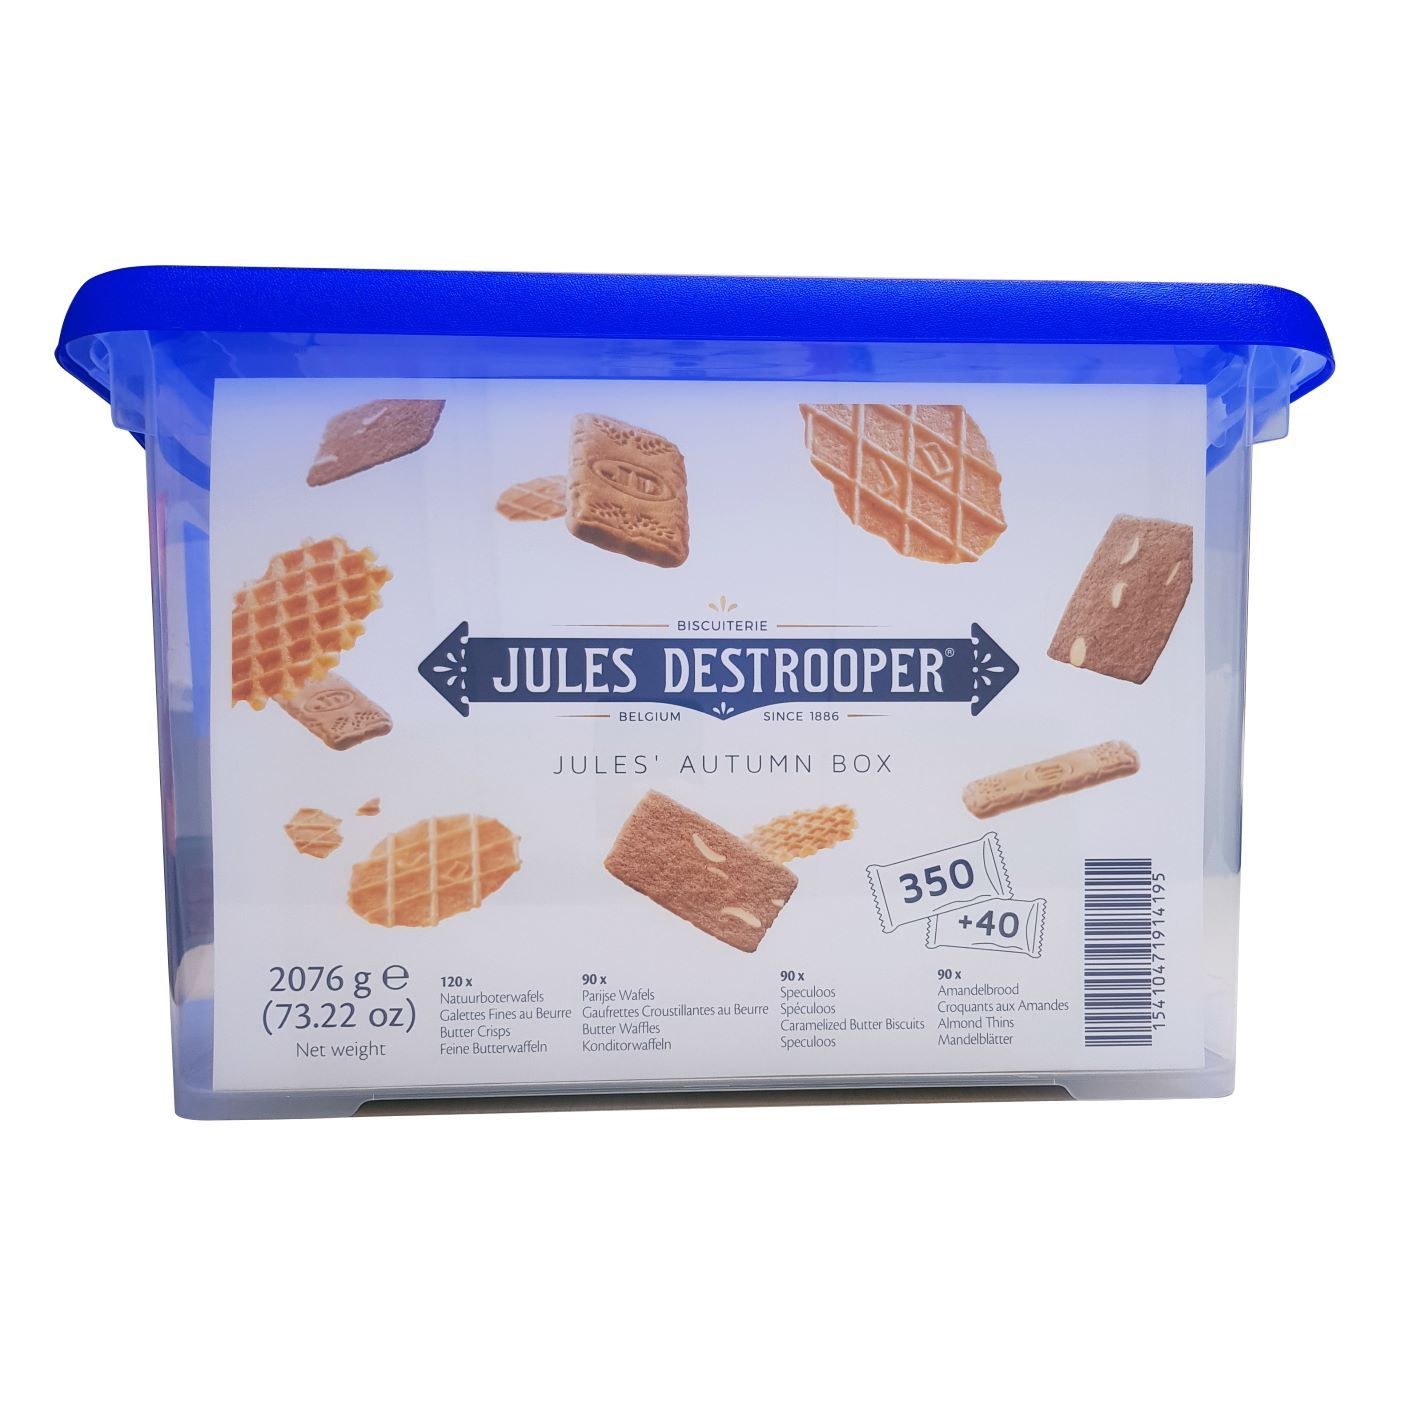 Jules Destrooper assortiment Autumn Box 350 + 40 gratuit